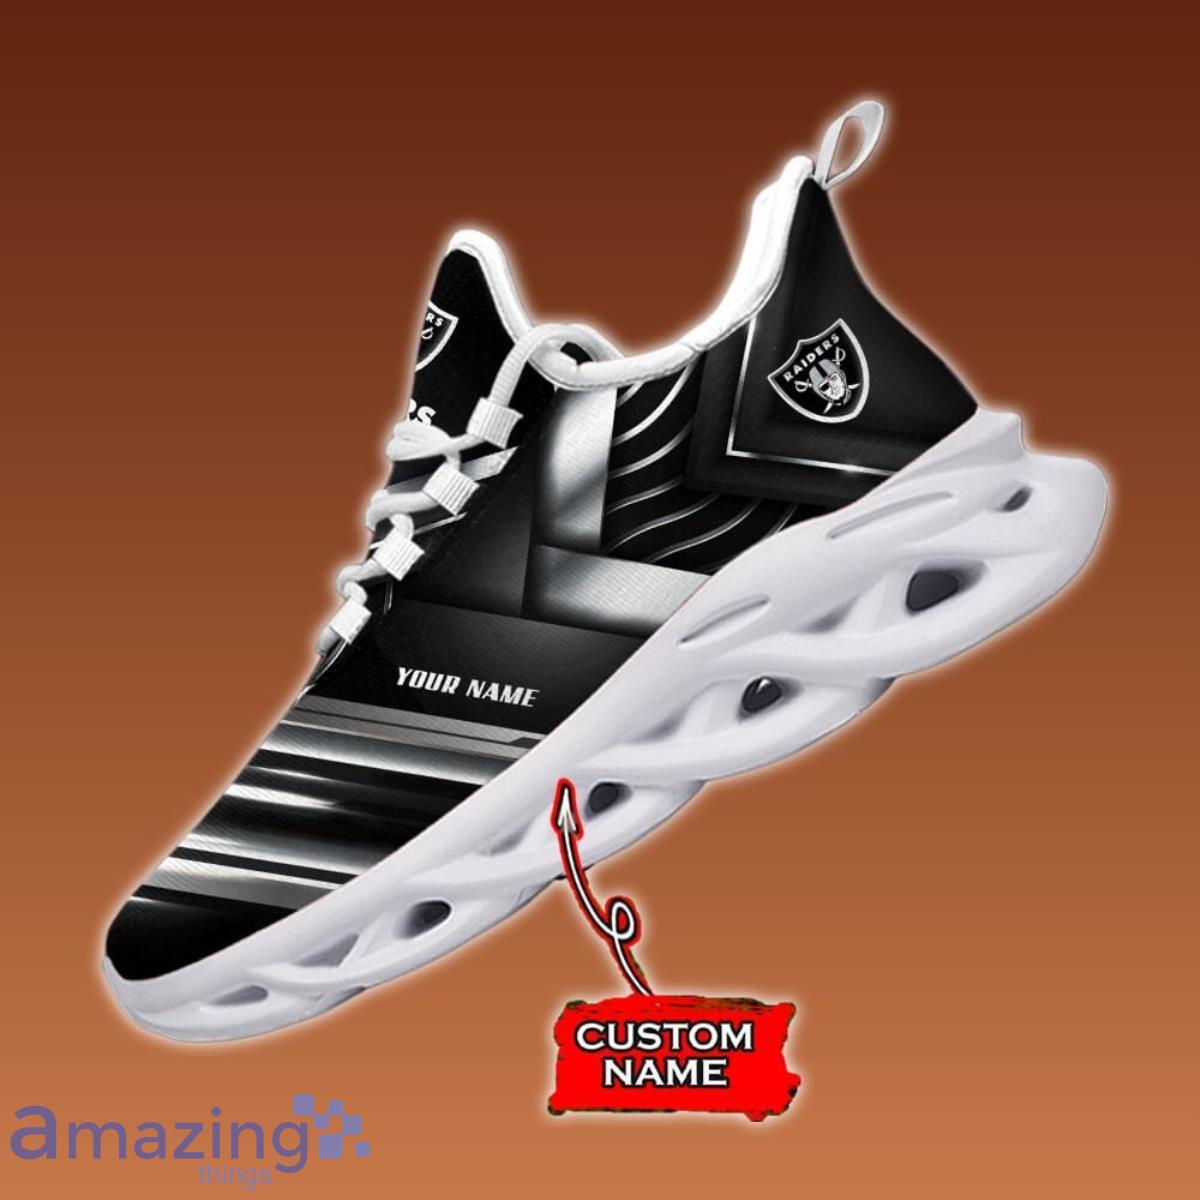 Las Vegas Raiders Custom Name Max Soul Shoes Impressive Gift For Men And Women Product Photo 1